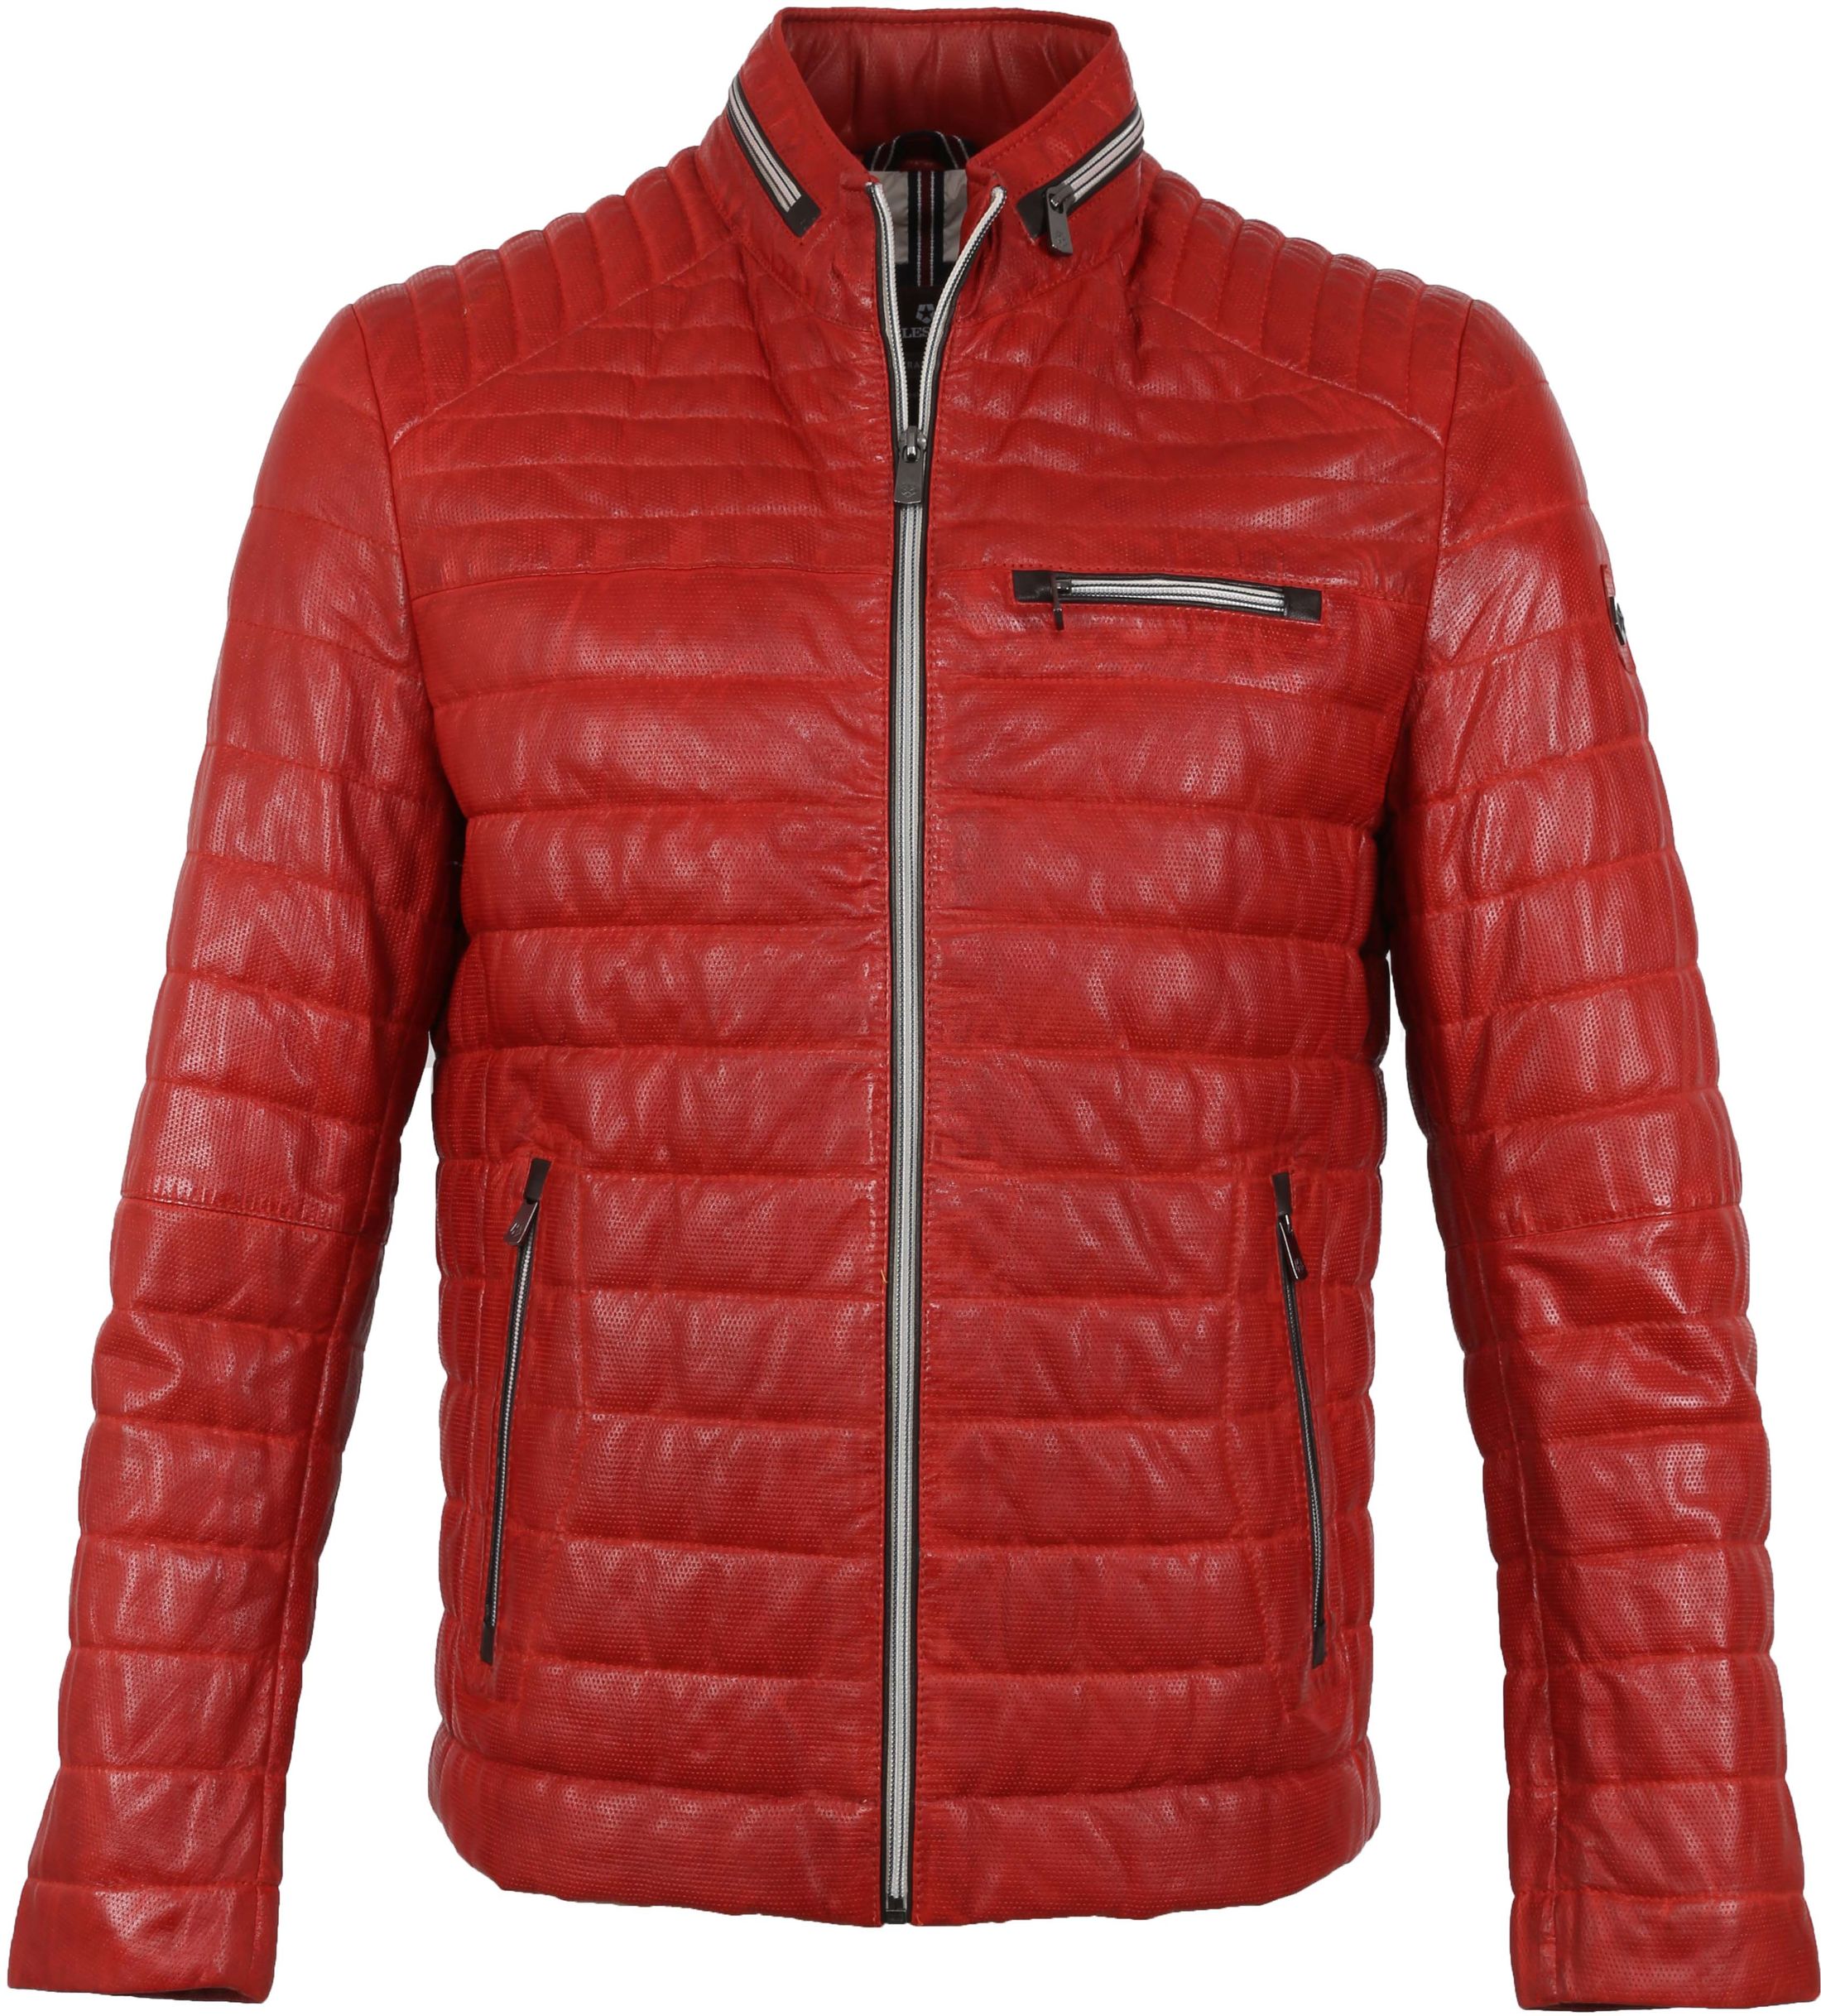 Milestone Terenzio Leather Jacket Red size 44-R